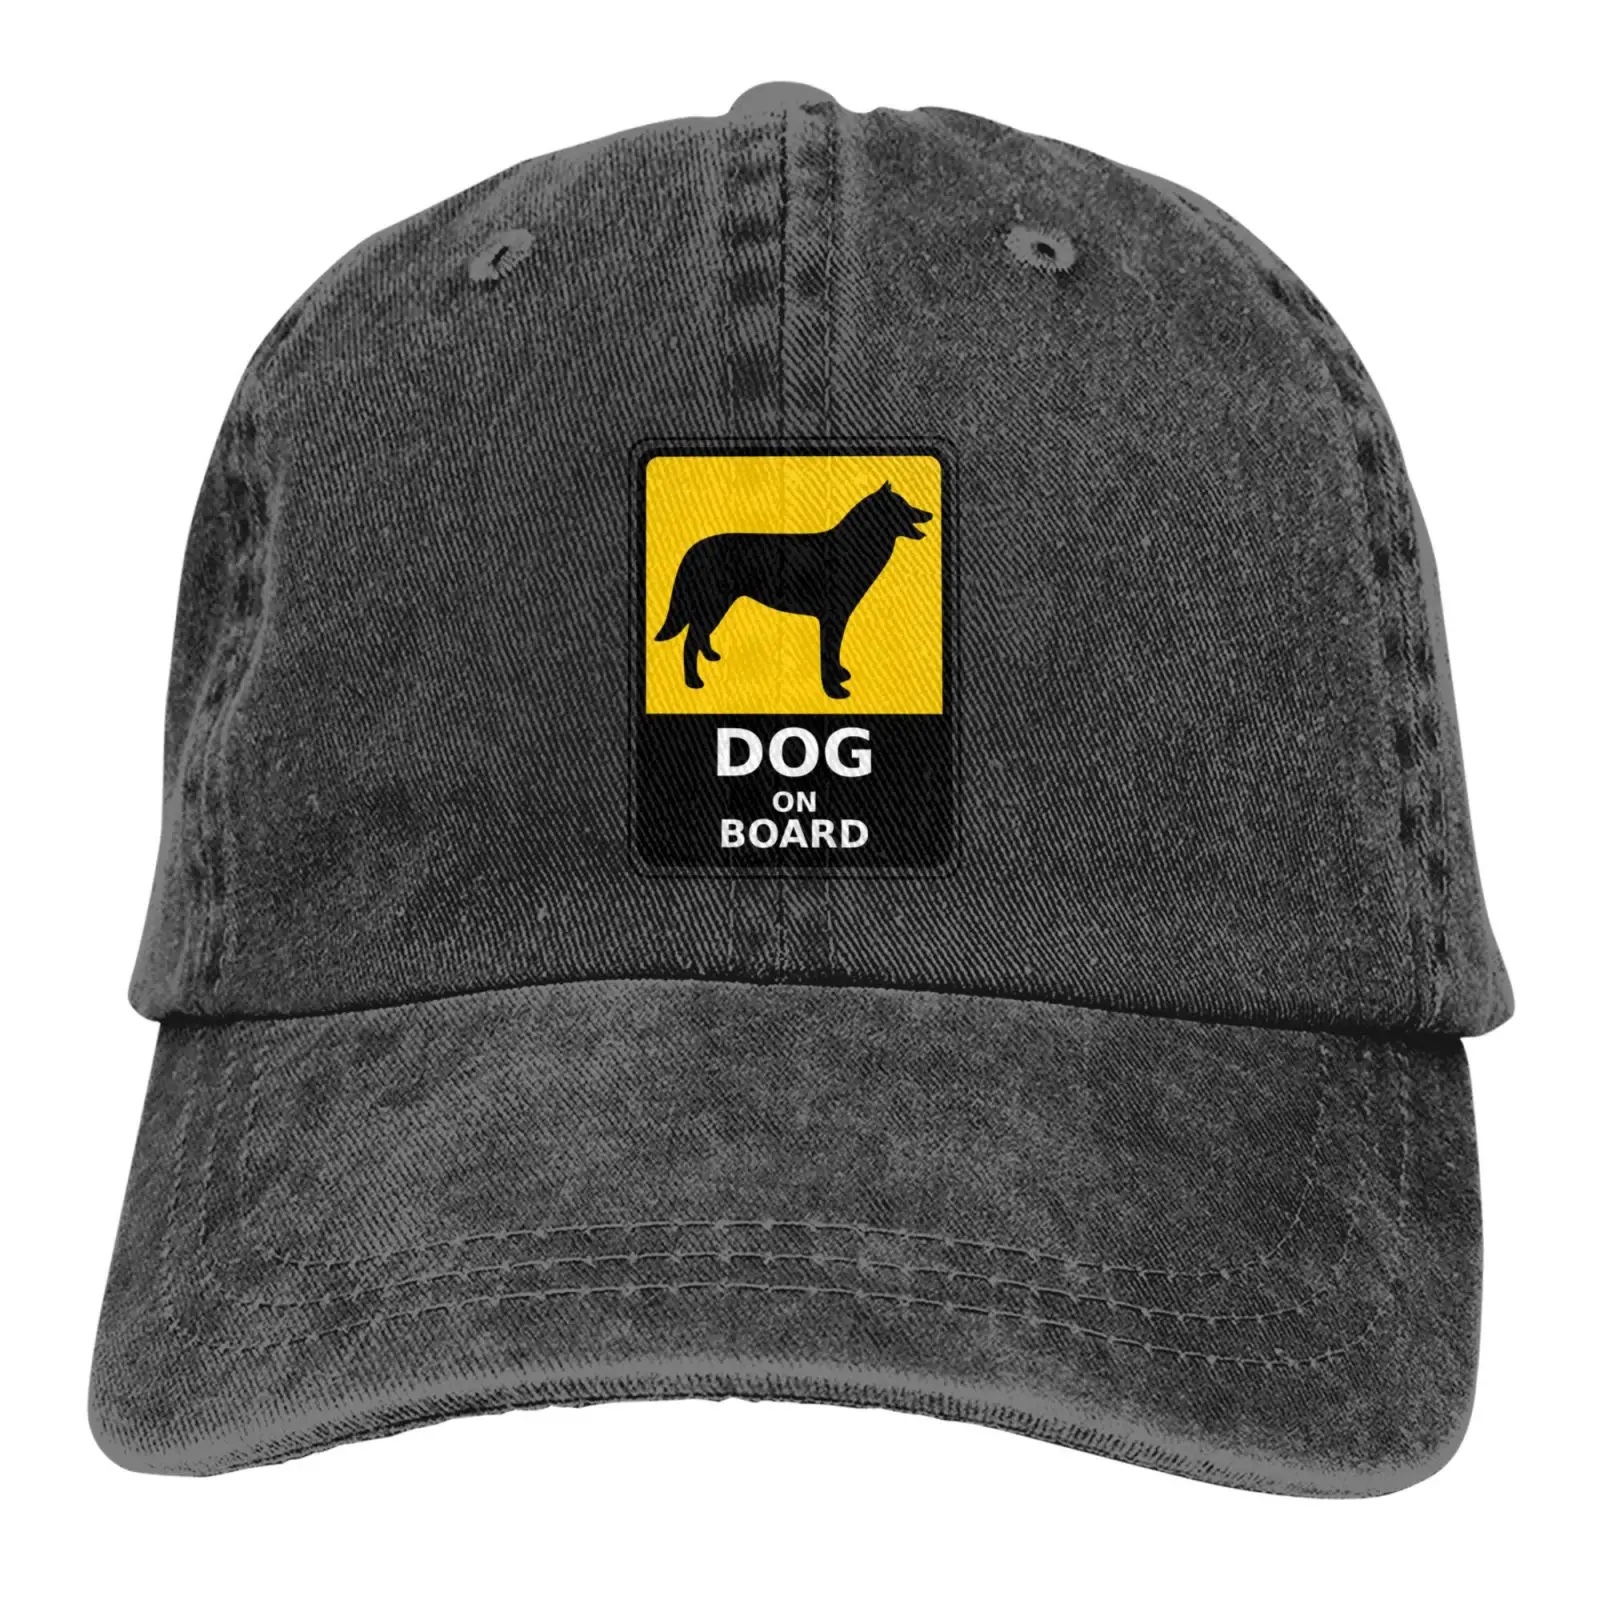 New Cotton Cowboy Hat Unisex Dog Pattern Hats Vintage Washed Dad Baseball Cap Adjustable Sports Cap